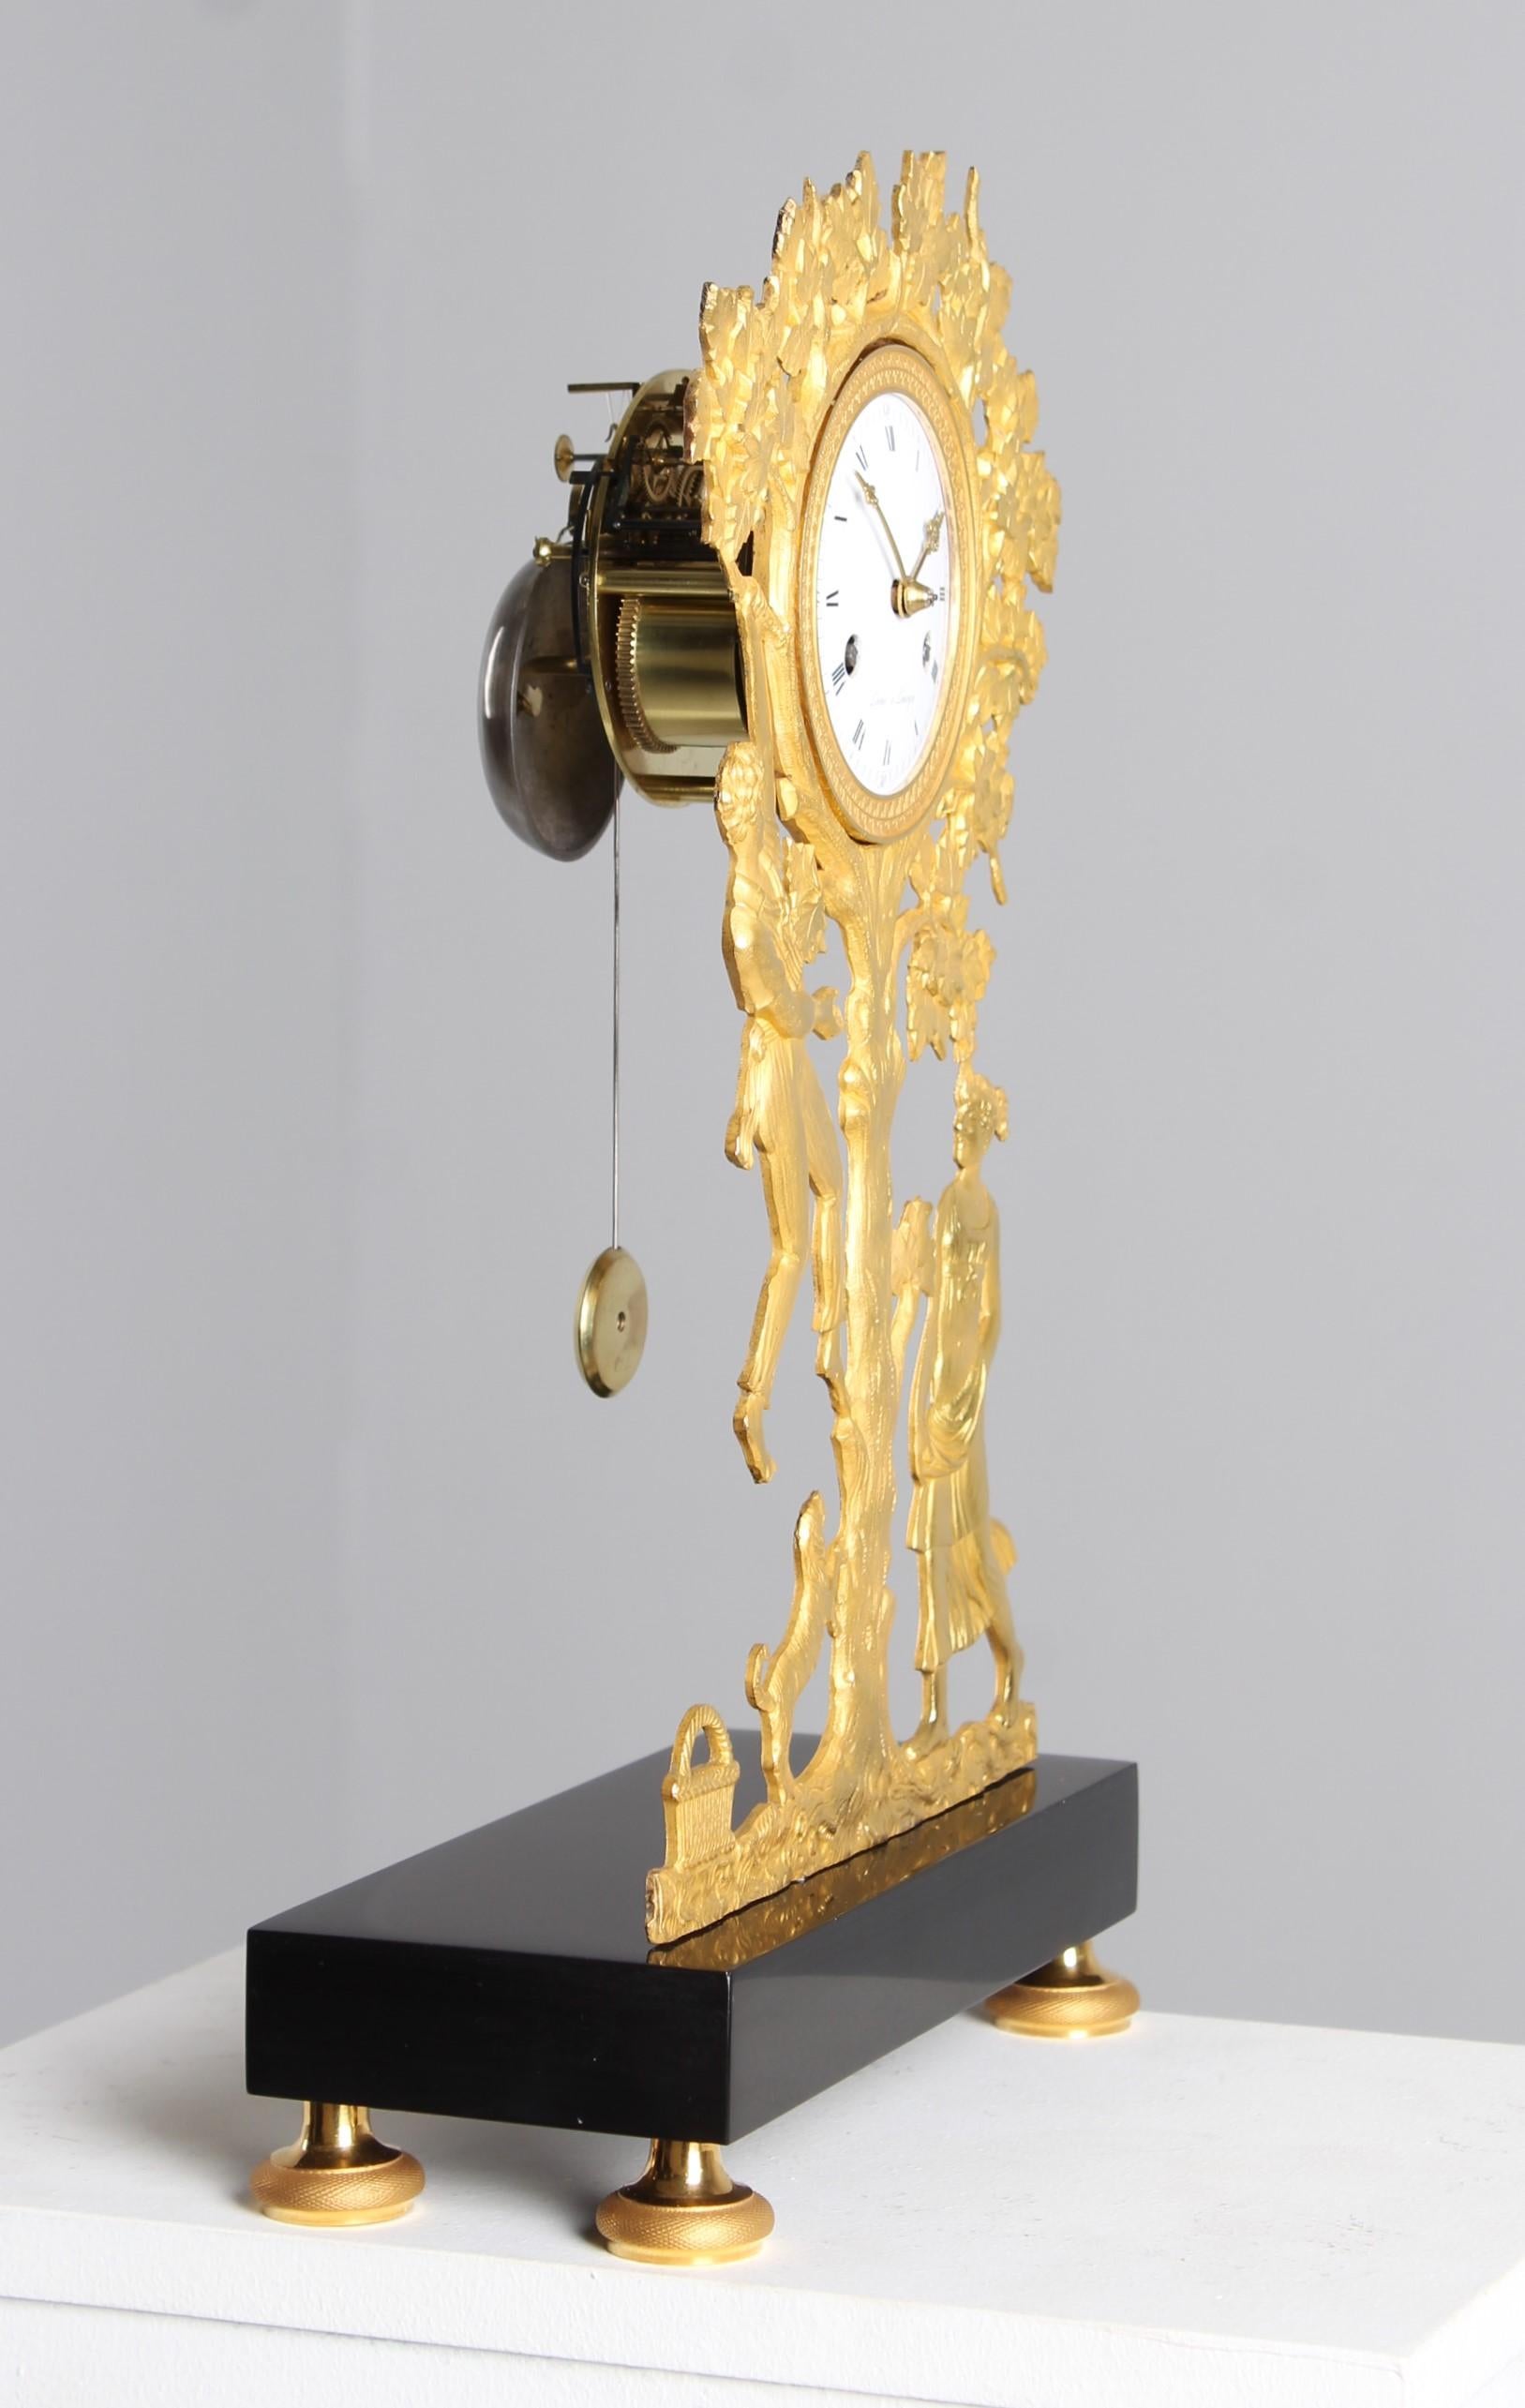 19th Century French Ormolu Mantel Clock, circa 1840 For Sale 2